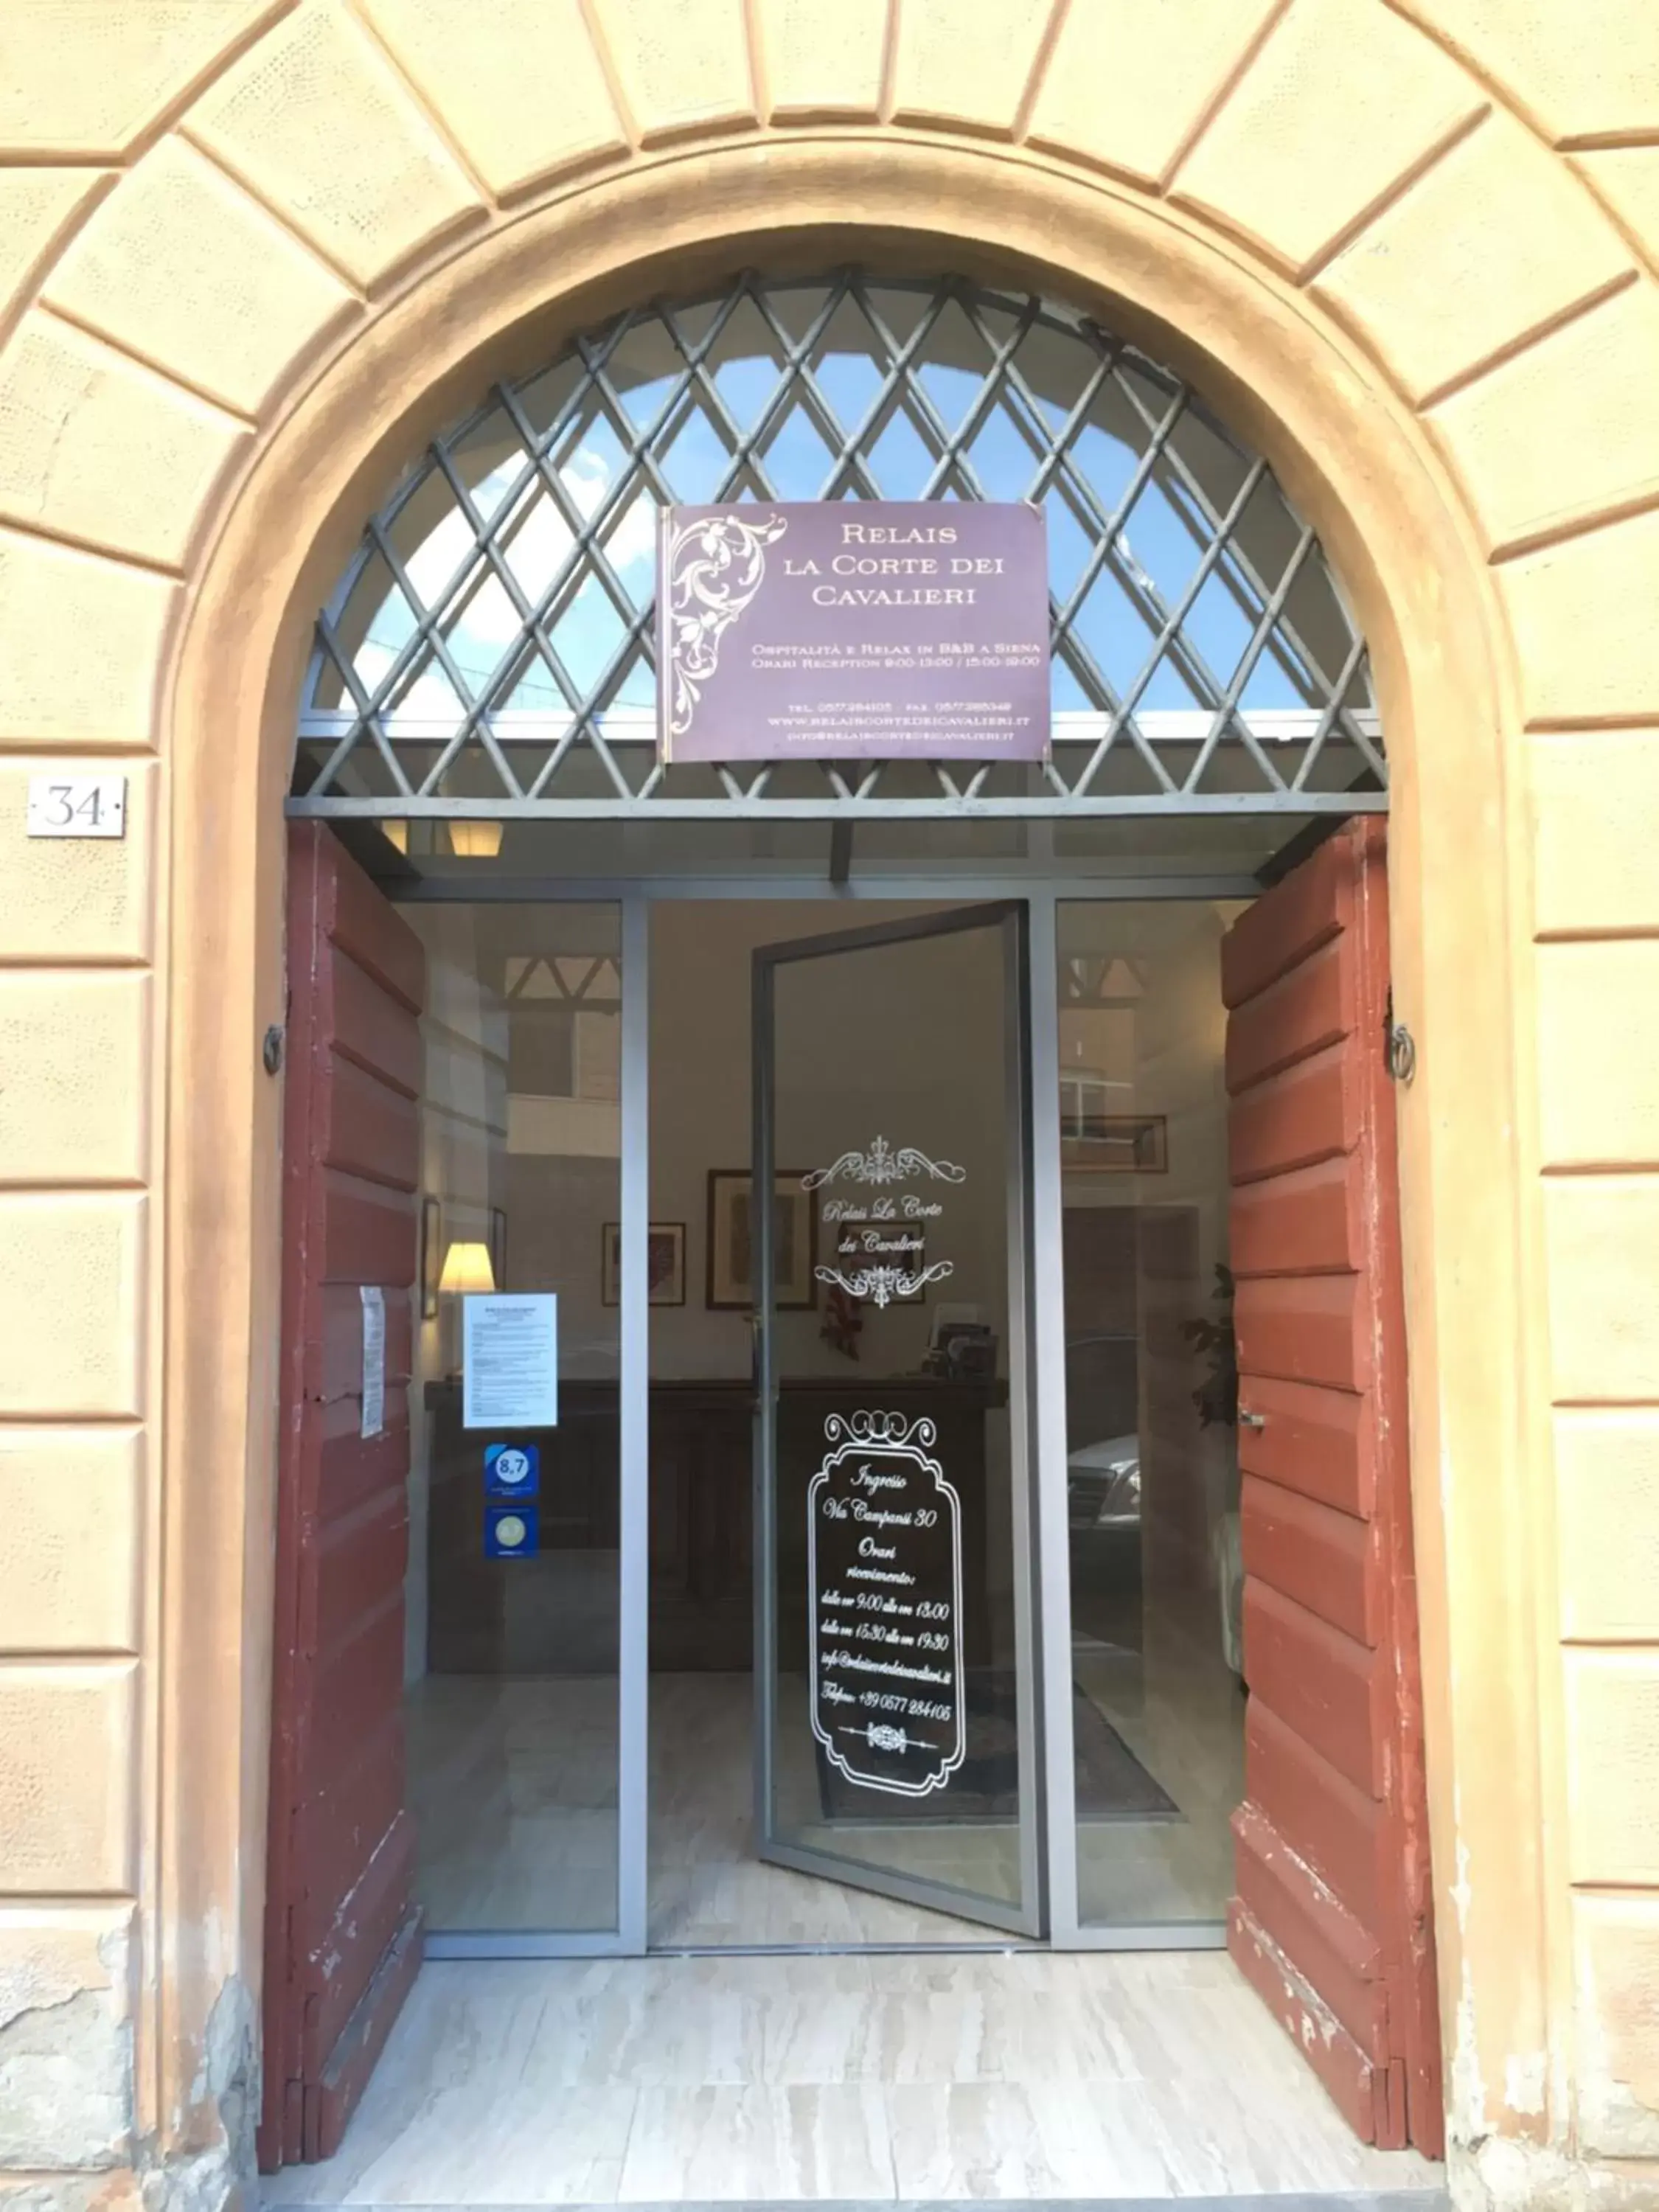 Facade/entrance in Relais La Corte dei Cavalieri